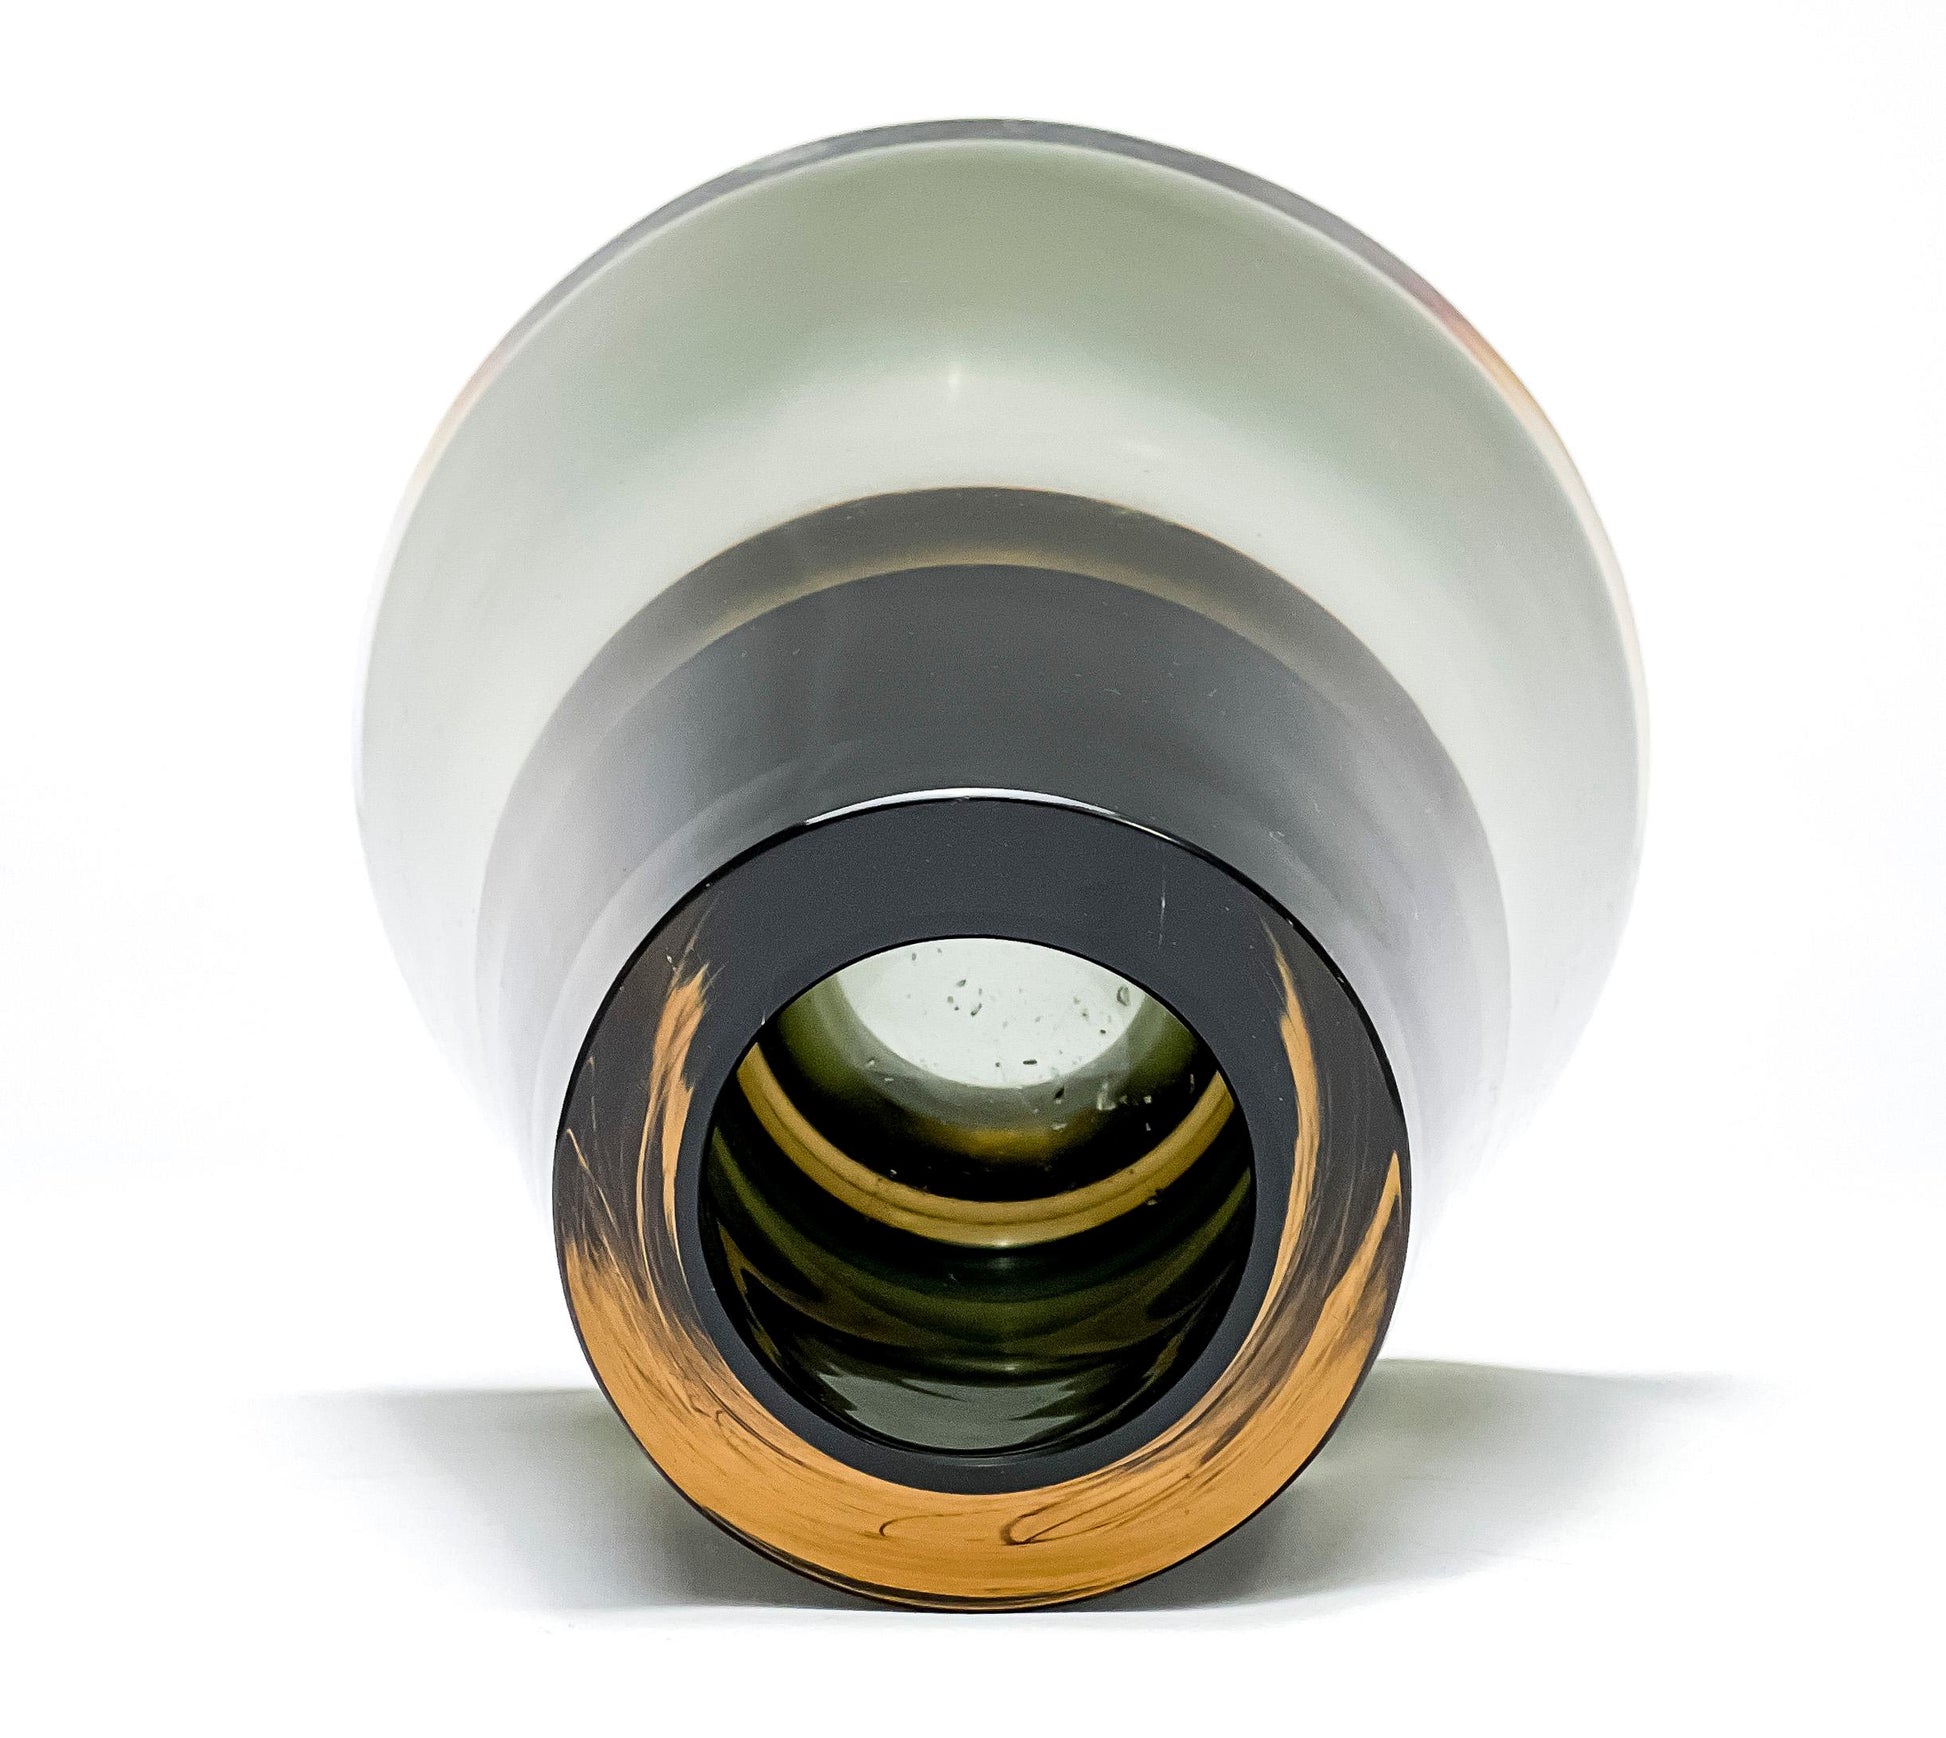 Antonio Da Ros (1936-2012), Murano Italy, Rare Clessidra Conico Glass Vase for Cenedese 24cm